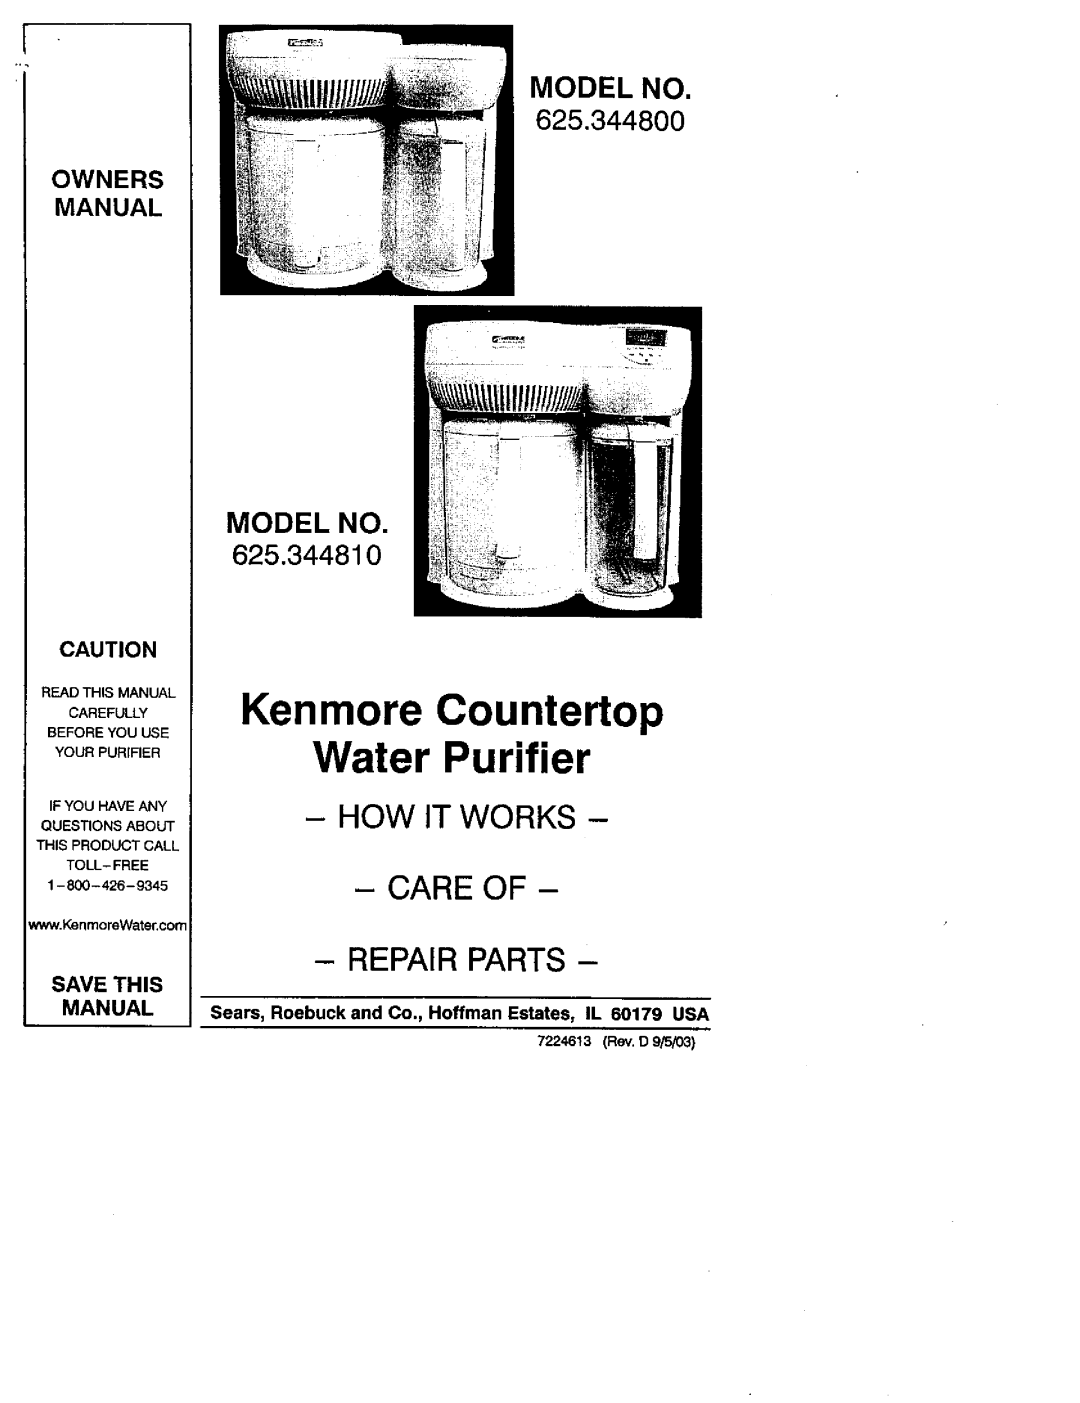 Kenmore 625.344800 owner manual Kenmore Countertop Water Purifier, How It Works Care Of Repair Parts, Model No, 625.344810 